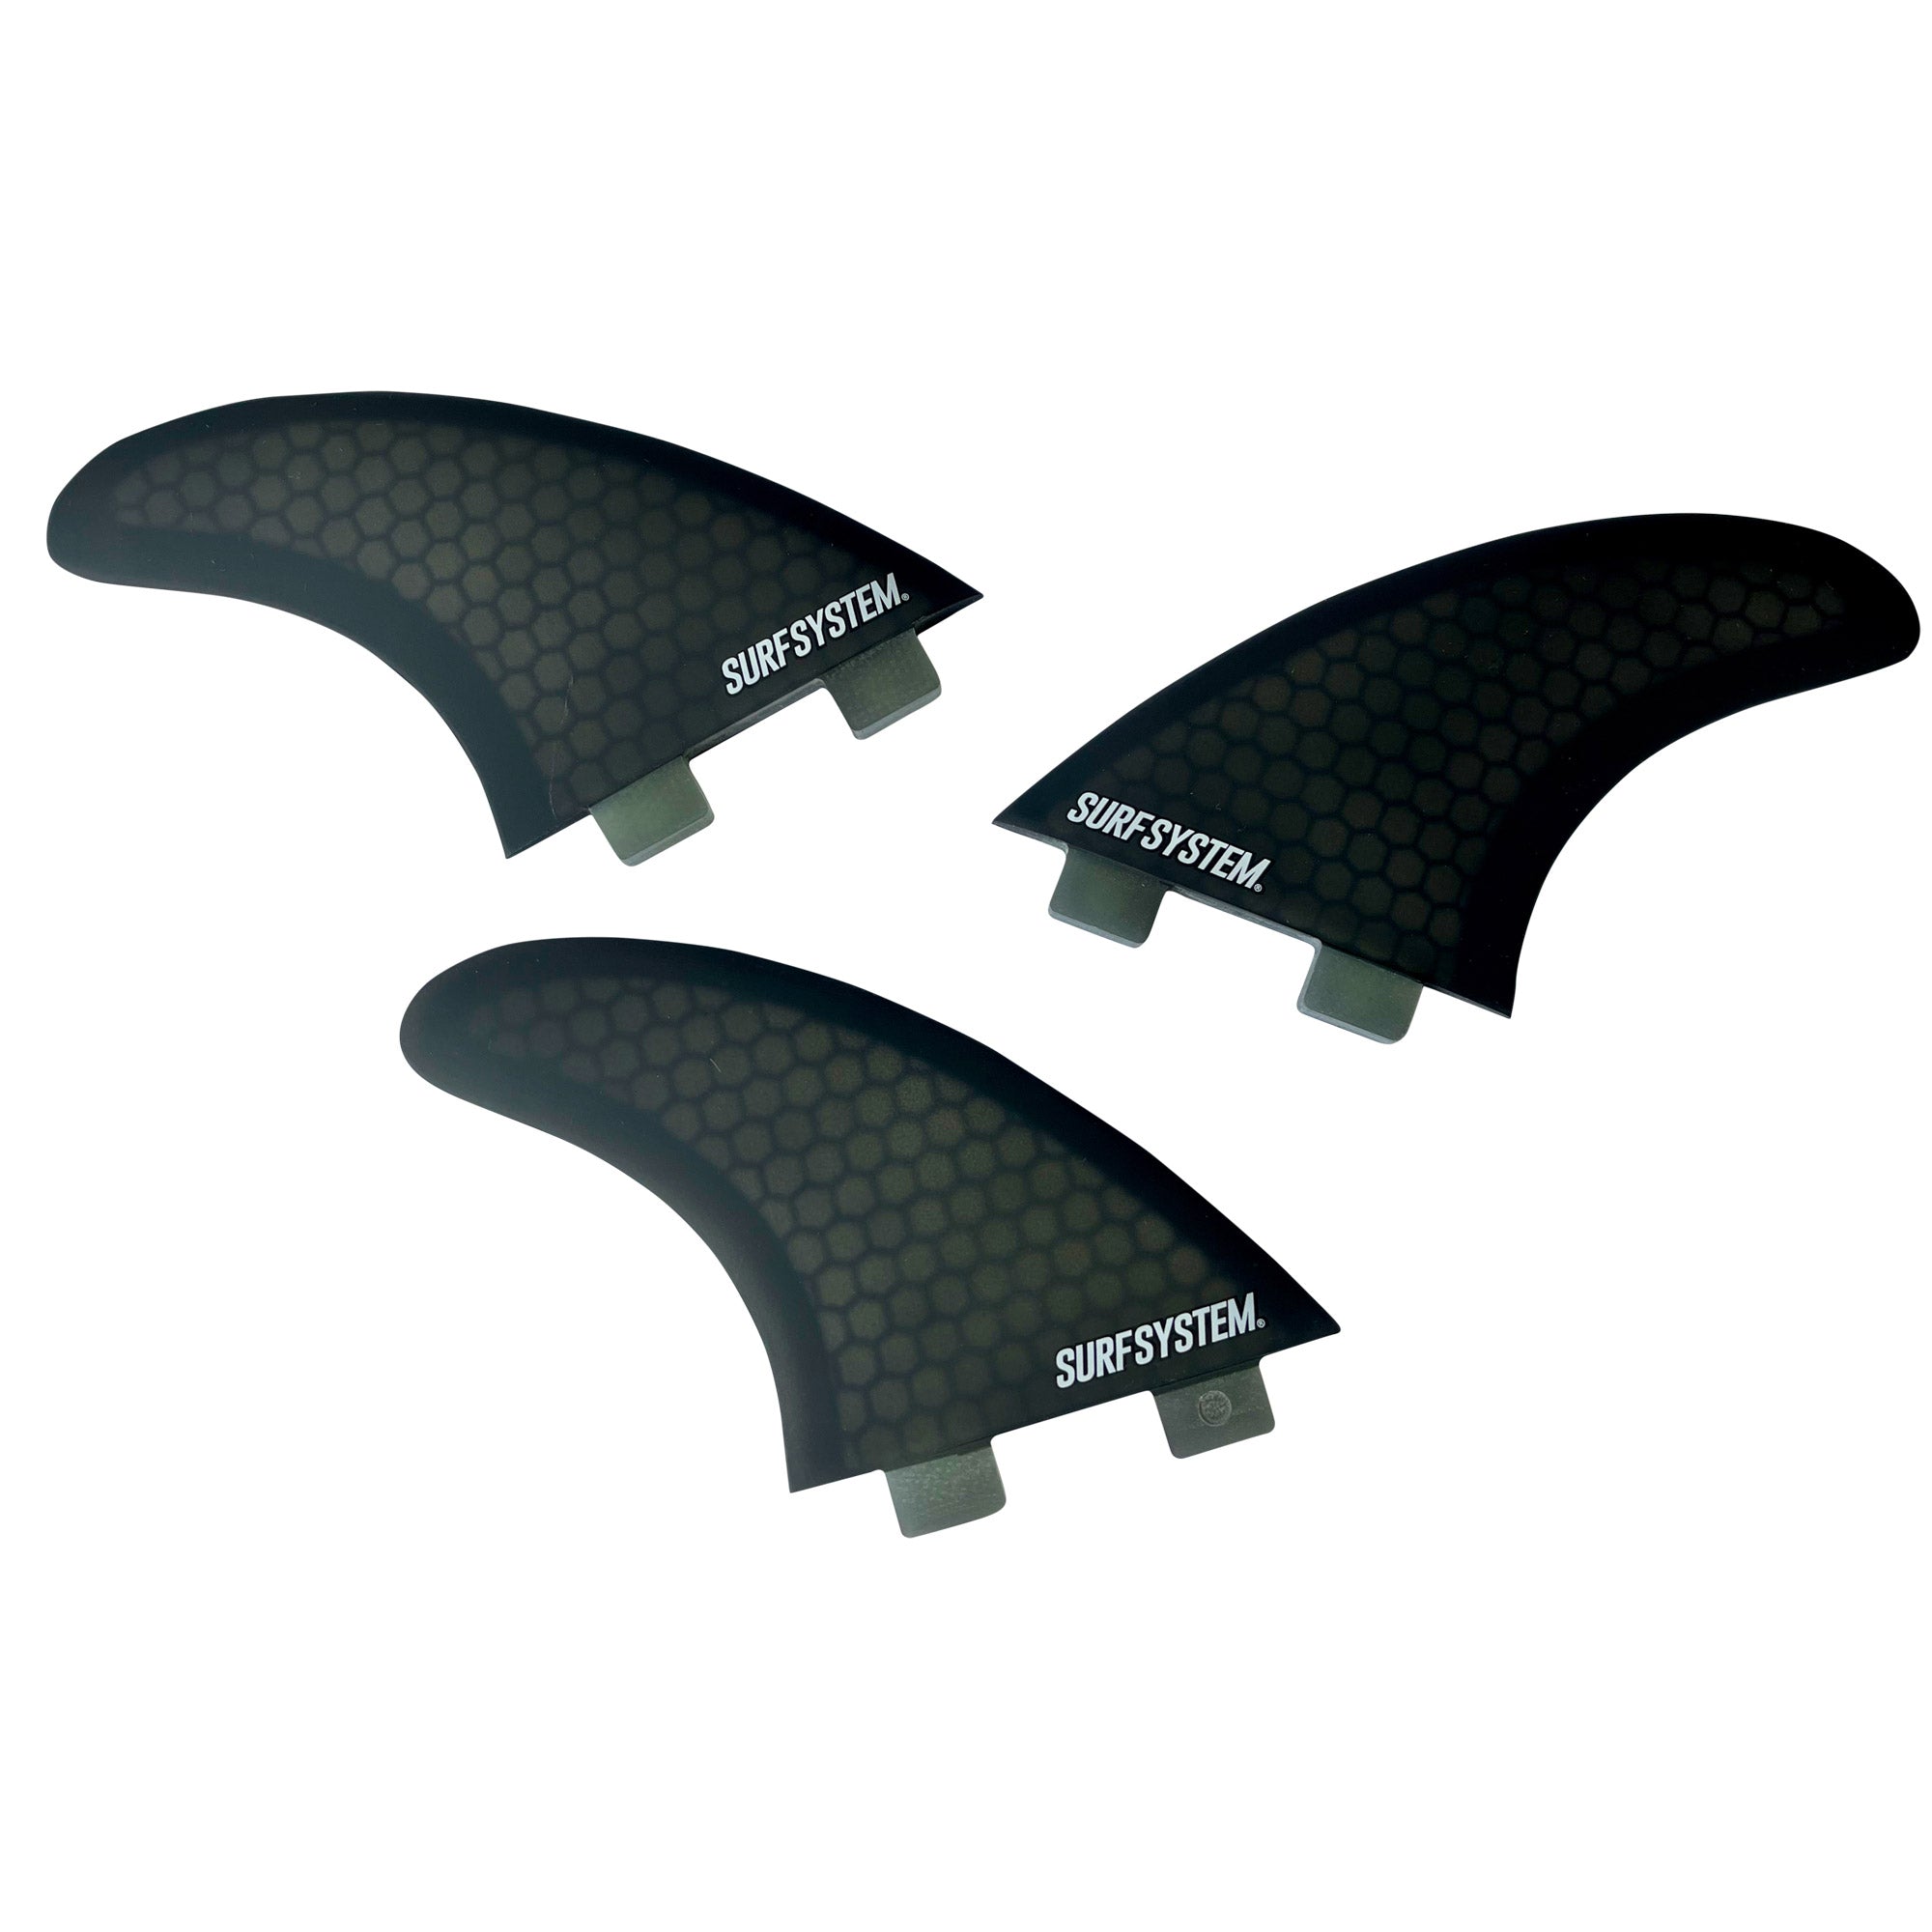 SURF SYSTEM - 3 fins Fiberglass Honeycomb compatibles FCS - Taille M - Smoke